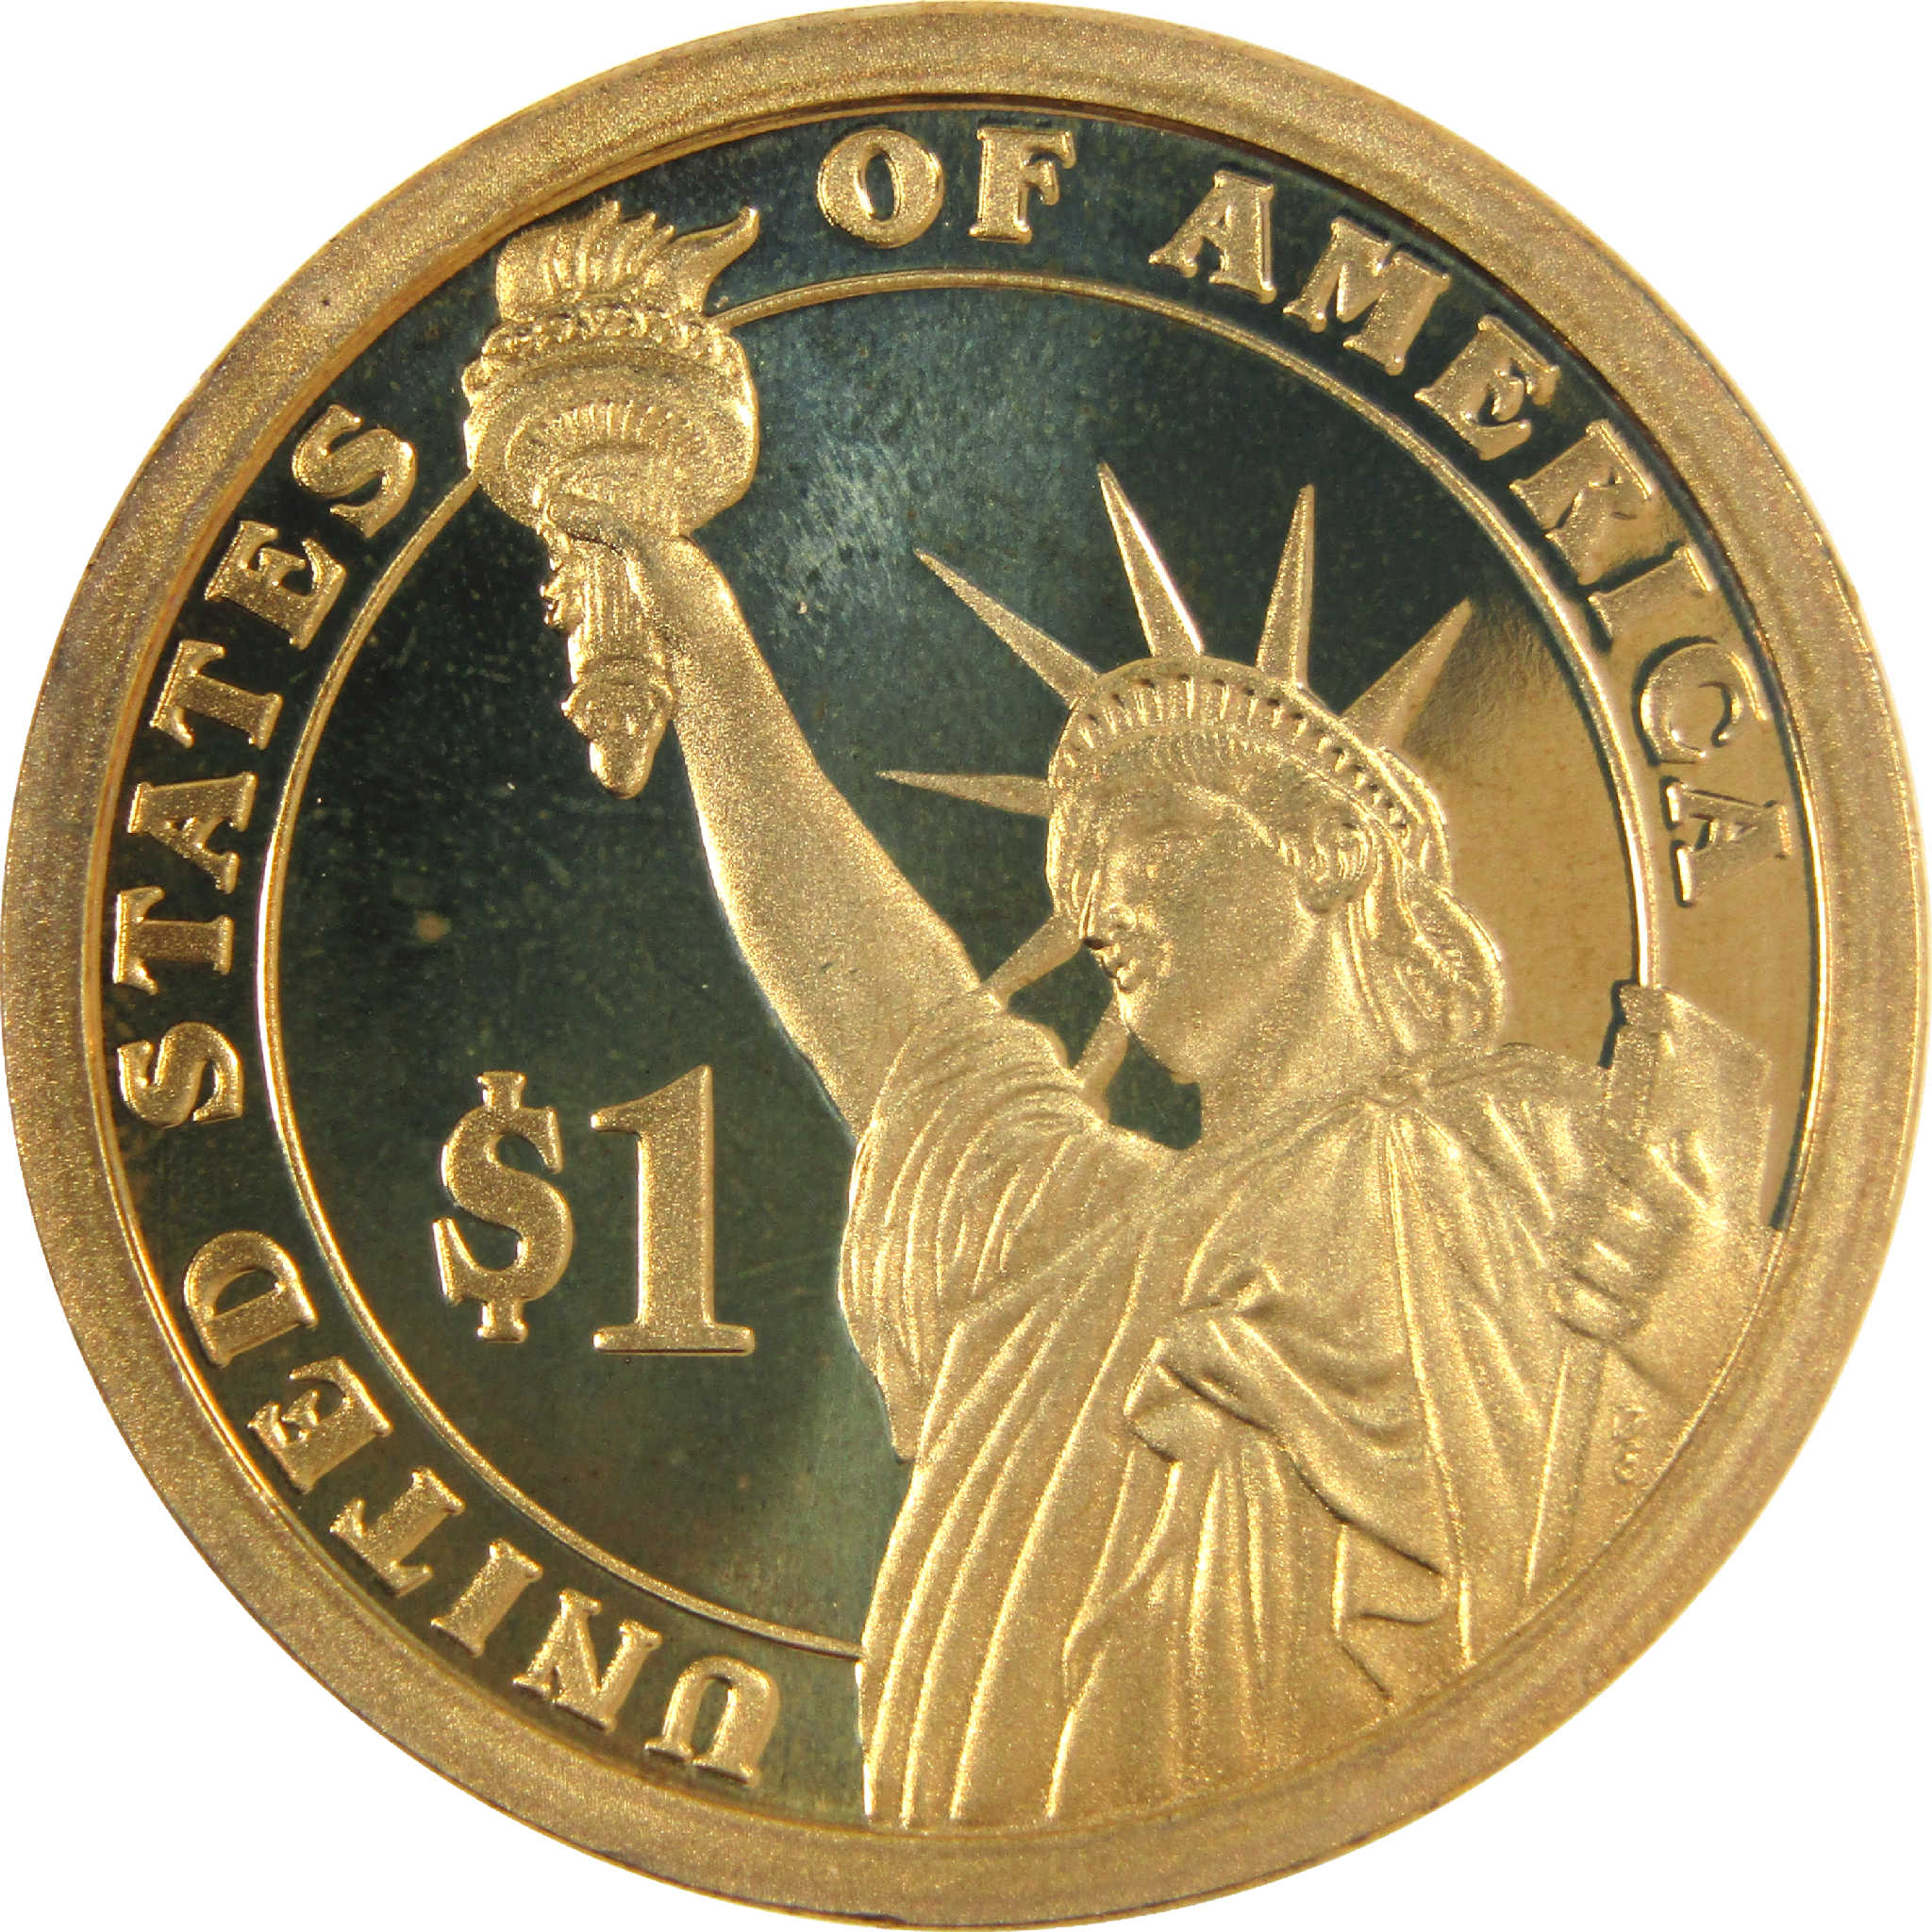 2008 S James Monroe Presidential Dollar Choice Proof $1 Coin